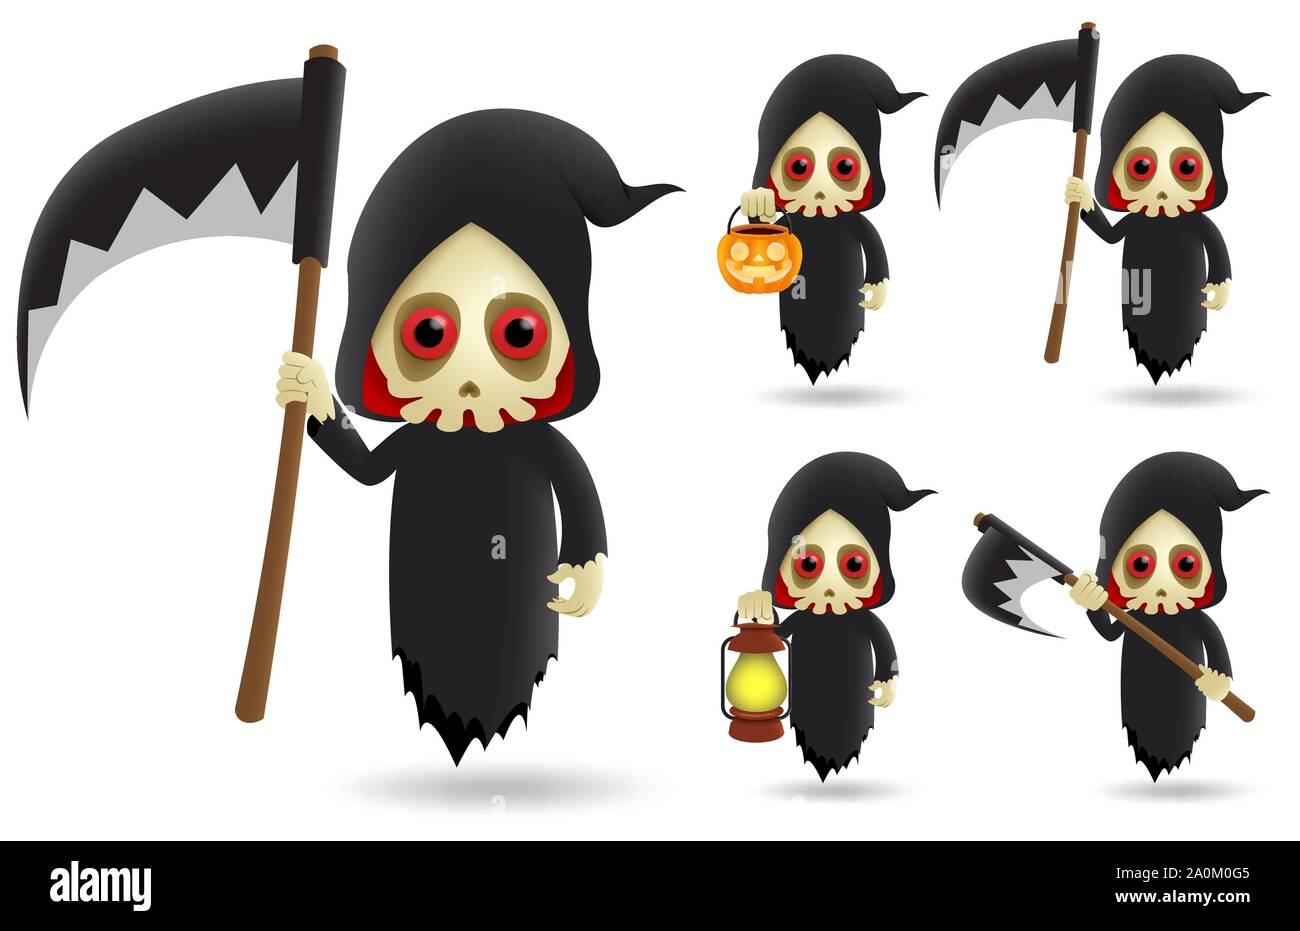 Grim reaper halloween character vector set. Grim reaper skeleton characters wearing halloween costume flying while holding scythe and pumpkin lantern. Stock Vector